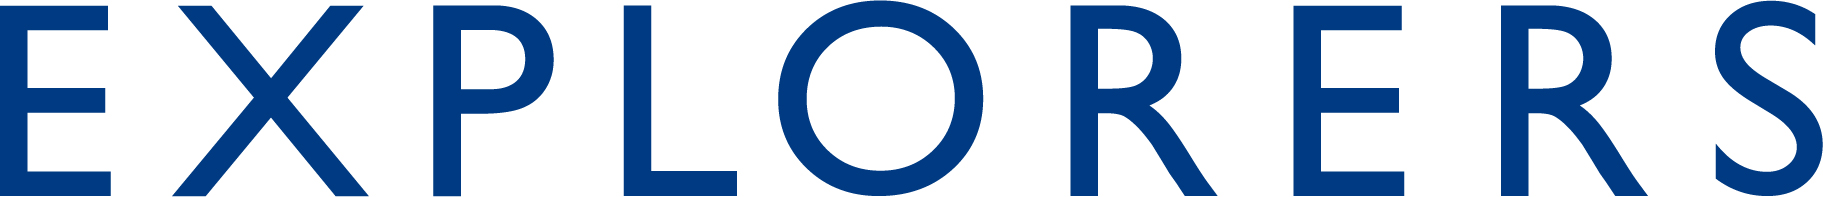 explorers-logo-blue-jpg